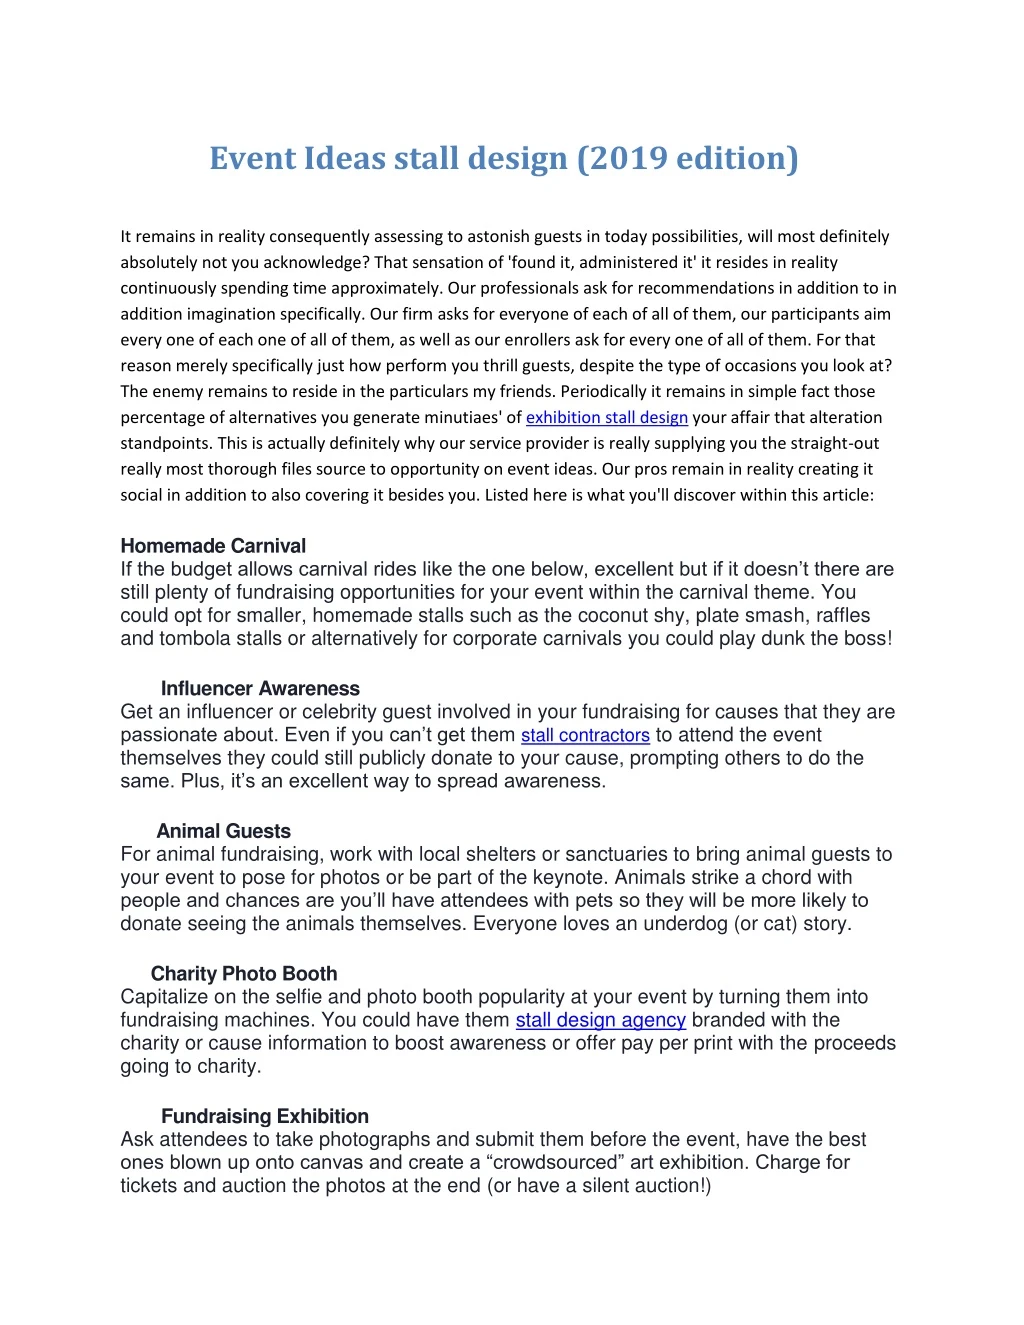 event ideas stall design 2019 edition